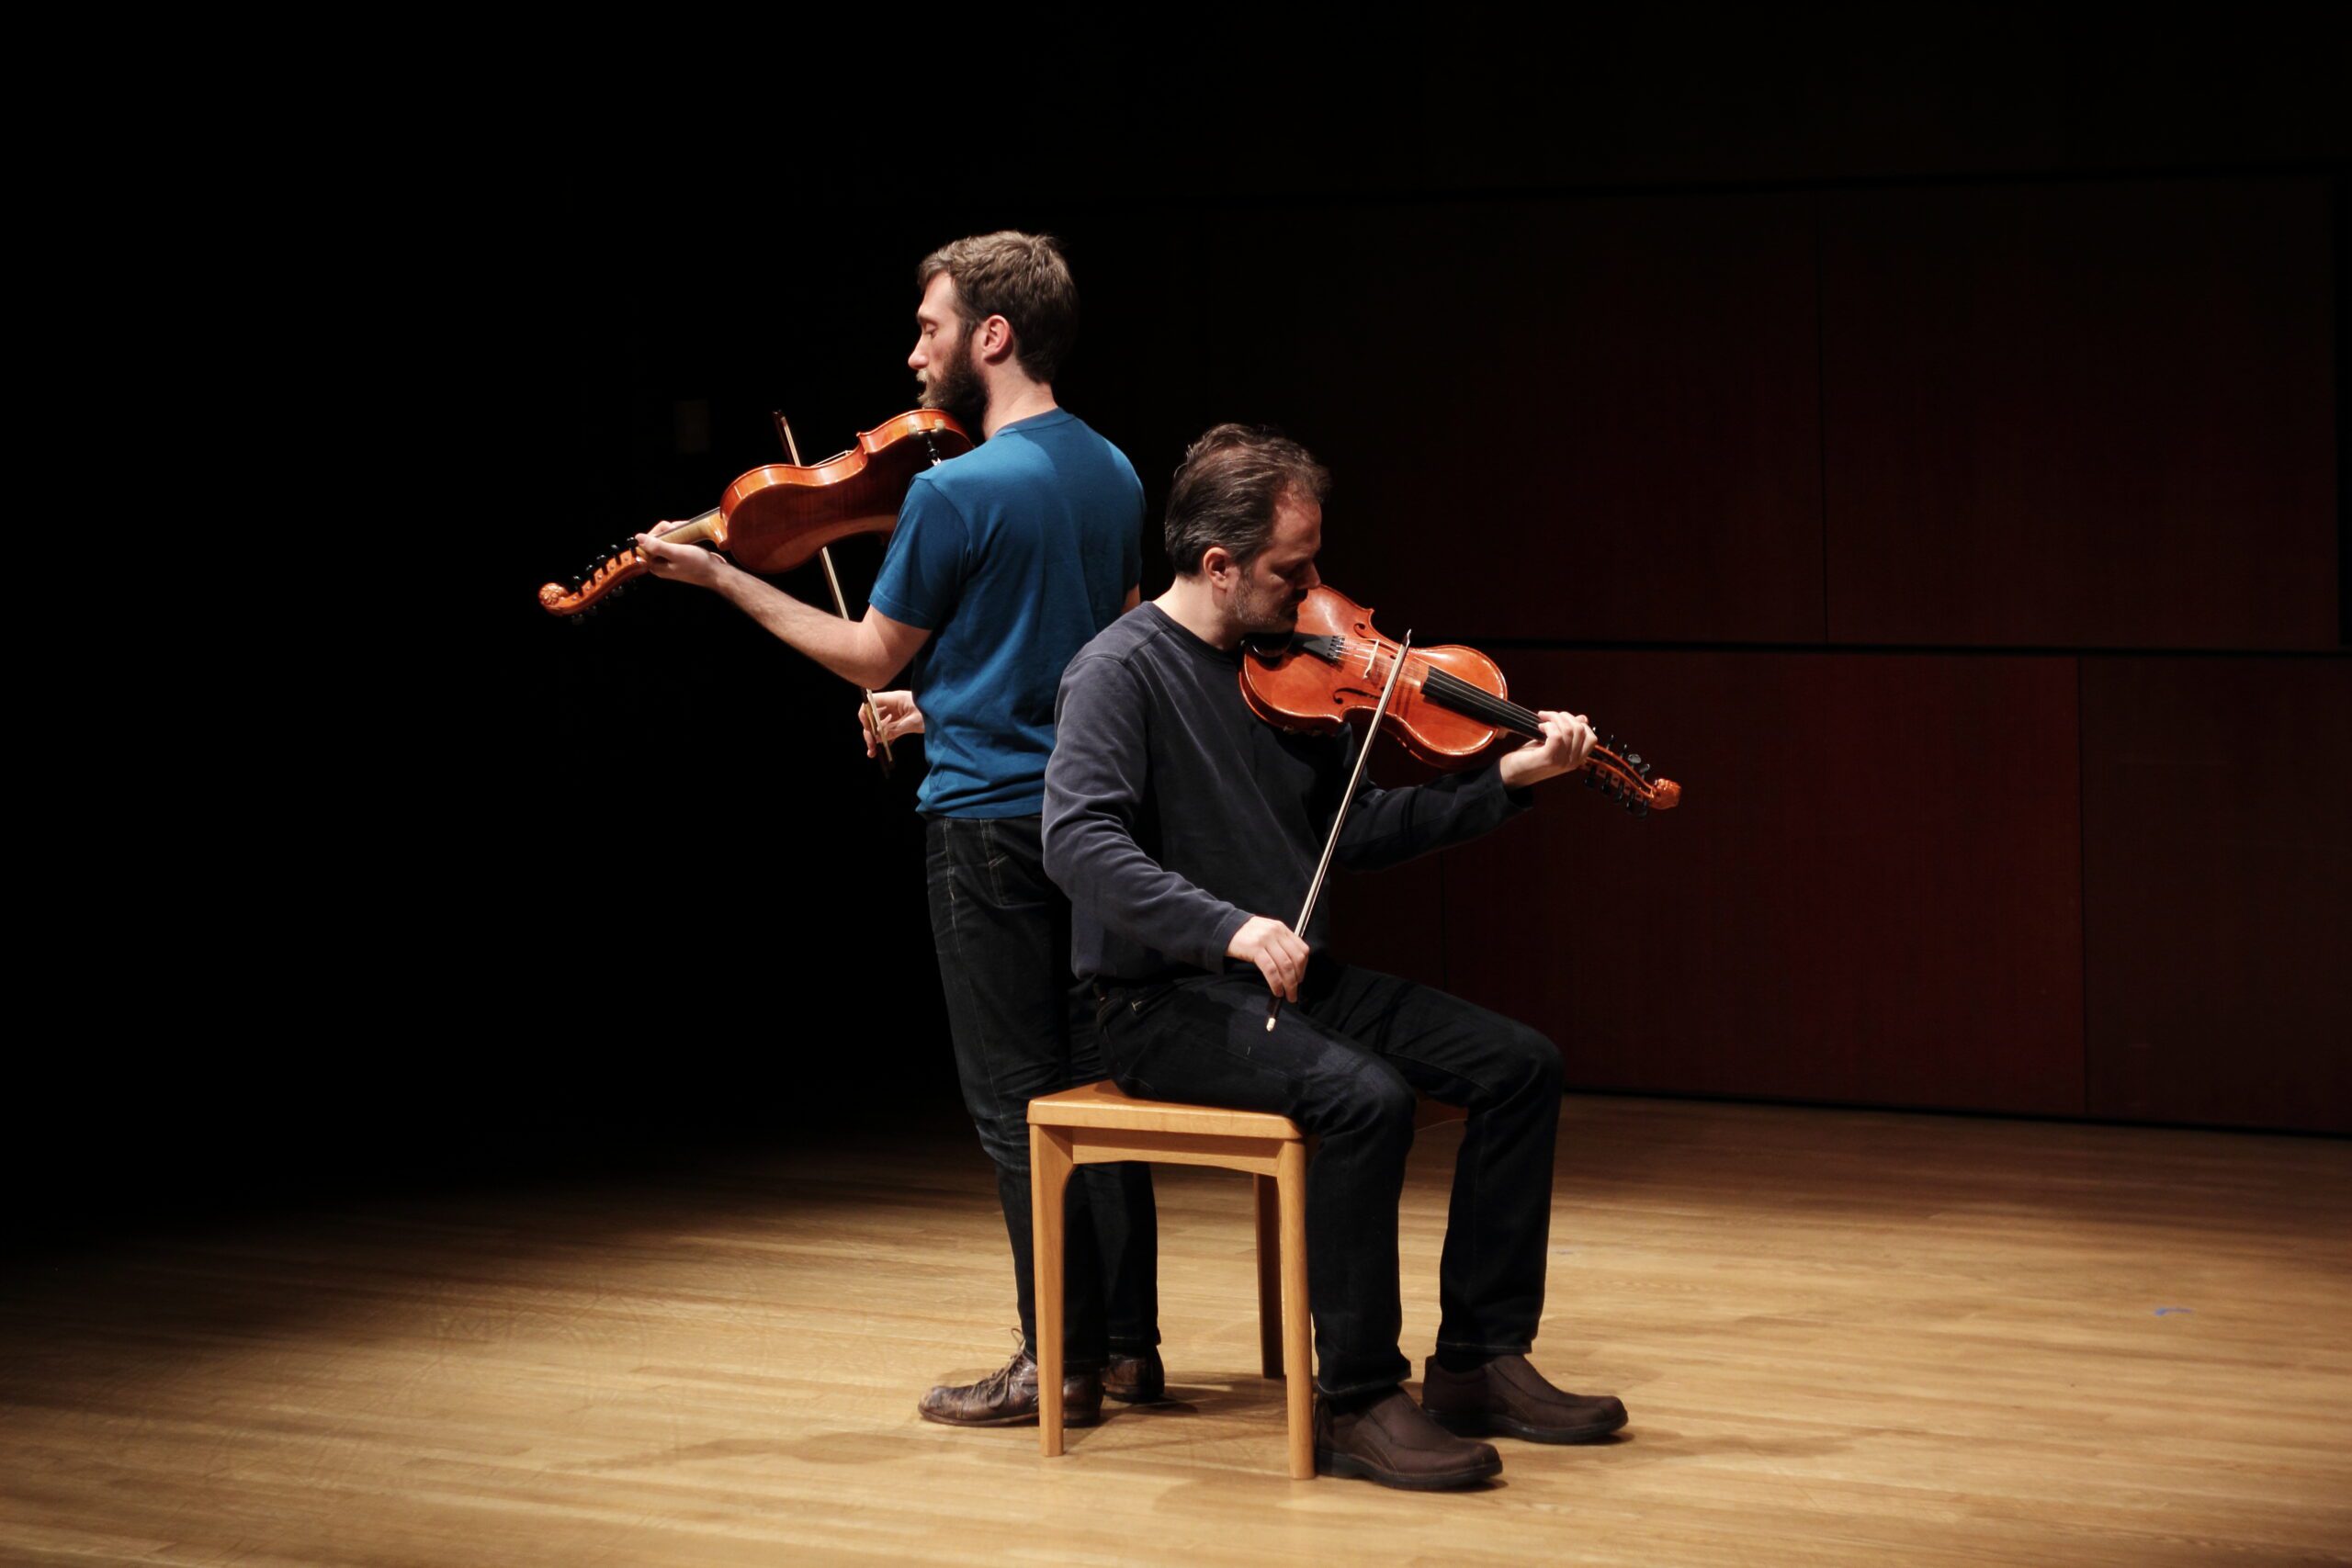 photo of Caoimhín Ó Raghallaigh and Dan Trueman, playing instruments on a darkened stage.